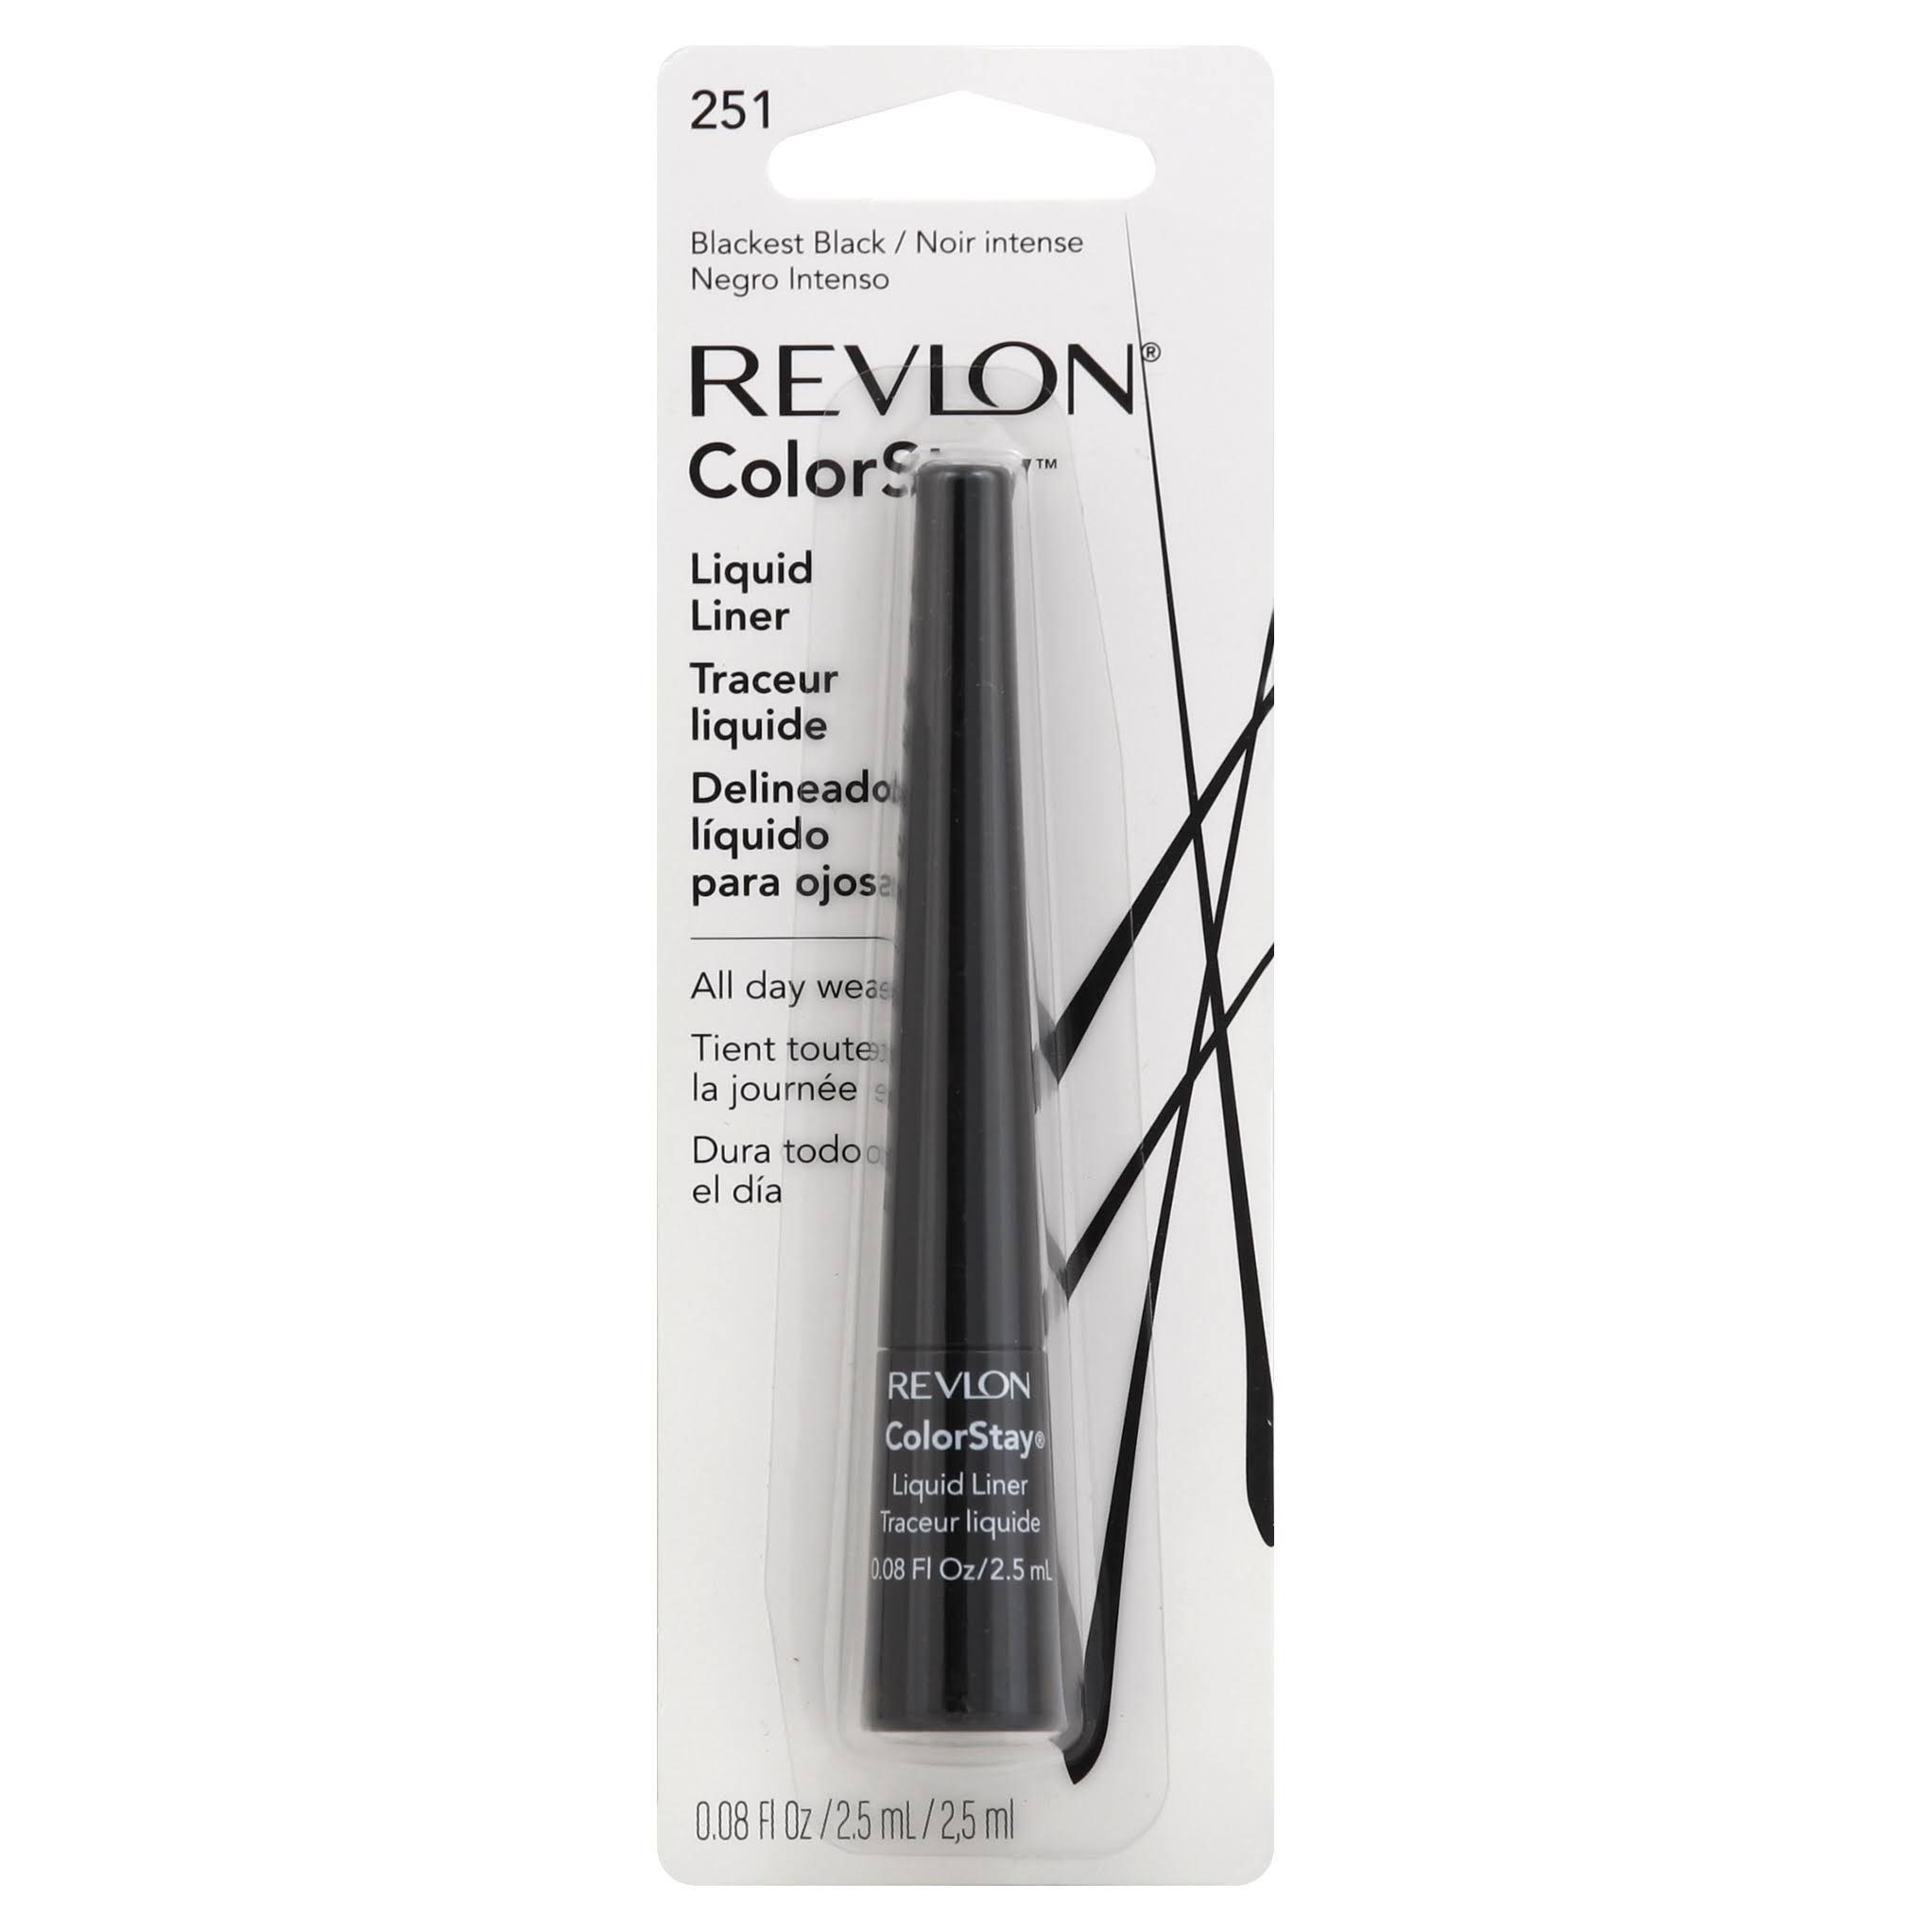 Revlon Colorstay Liquid Eyeliner - Black, 0.08oz